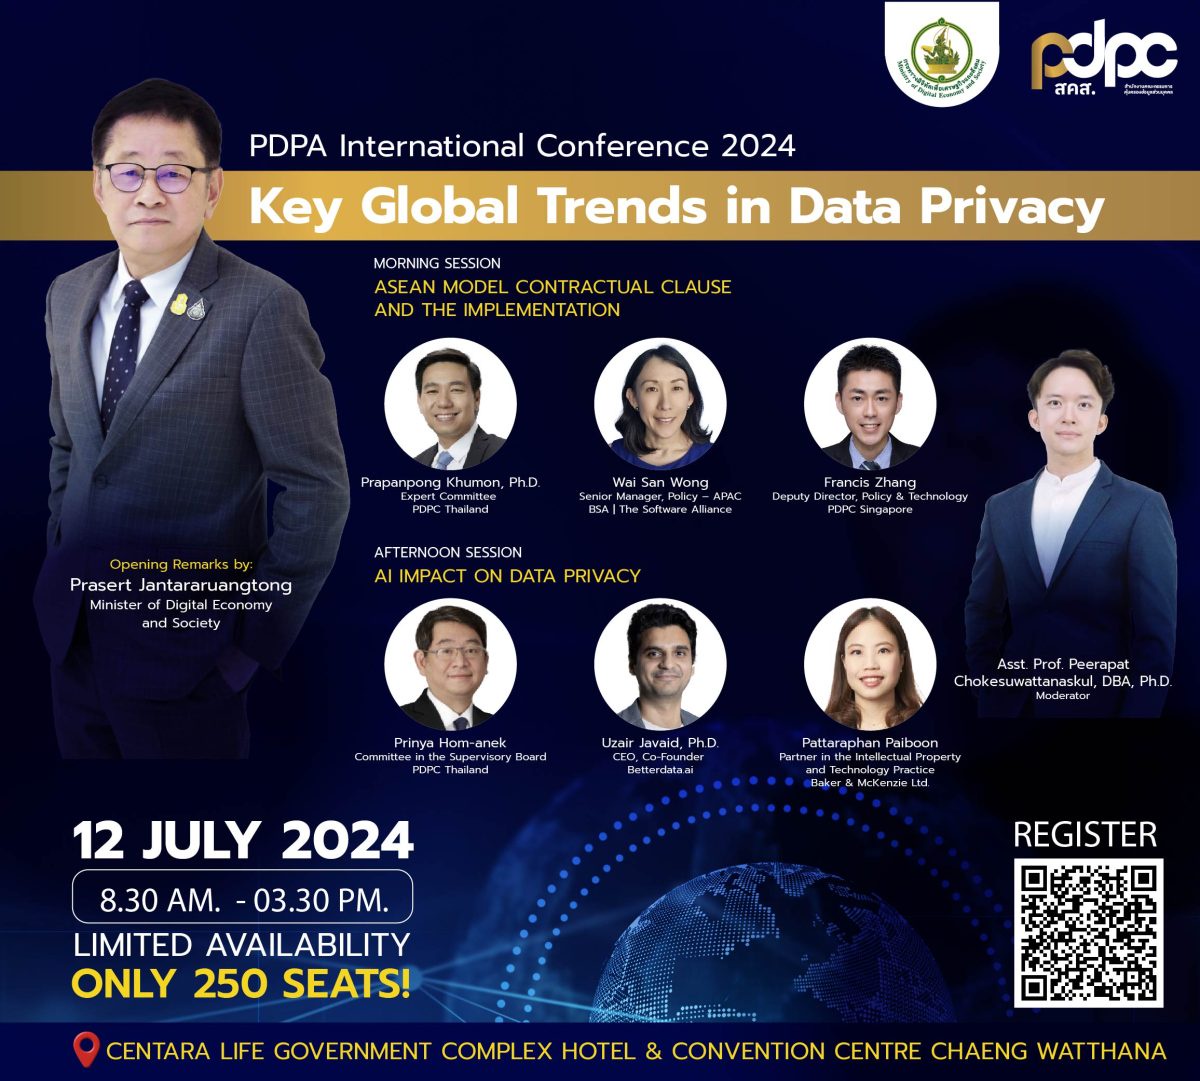 PDPC จัดเสวนาสร้างความตระหนักรู้เกี่ยวกับกฎหมาย การคุ้มครองข้อมูลส่วนบุคคลระดับนานาชาติ PDPA International Conference 2024 : Key Global Trends in Data Privacy